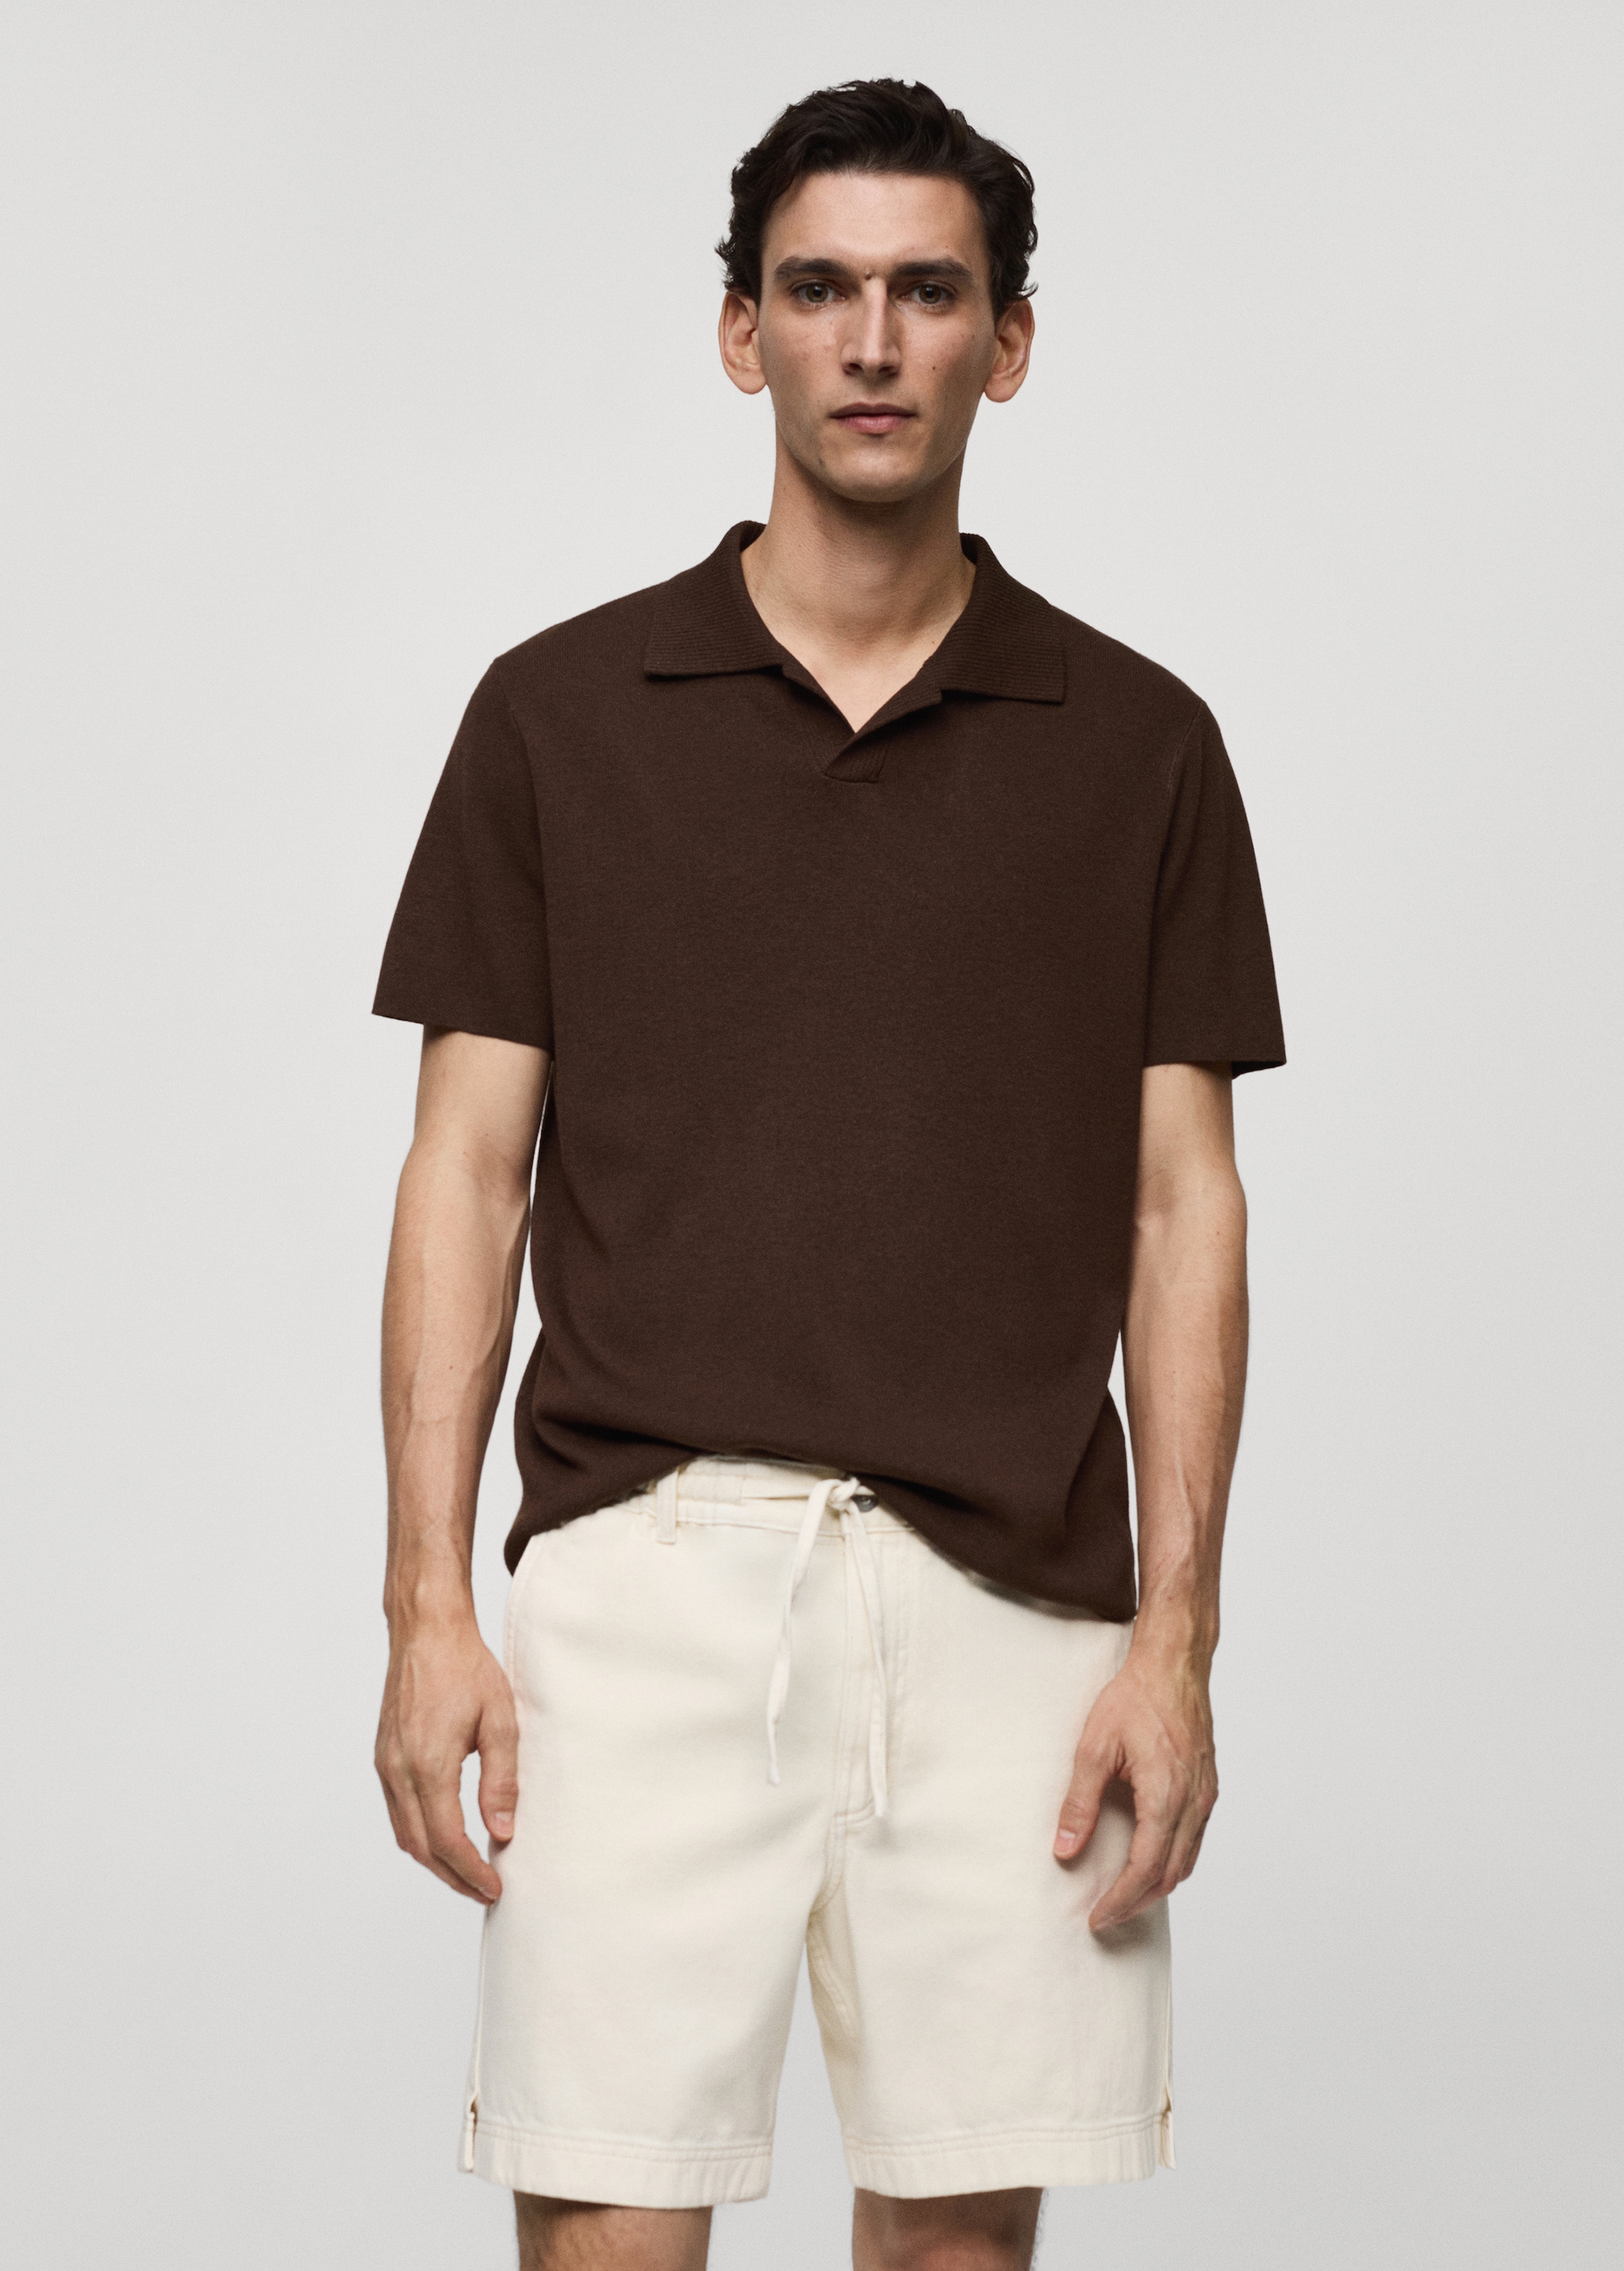 Textured cotton polo shirt - Medium plane